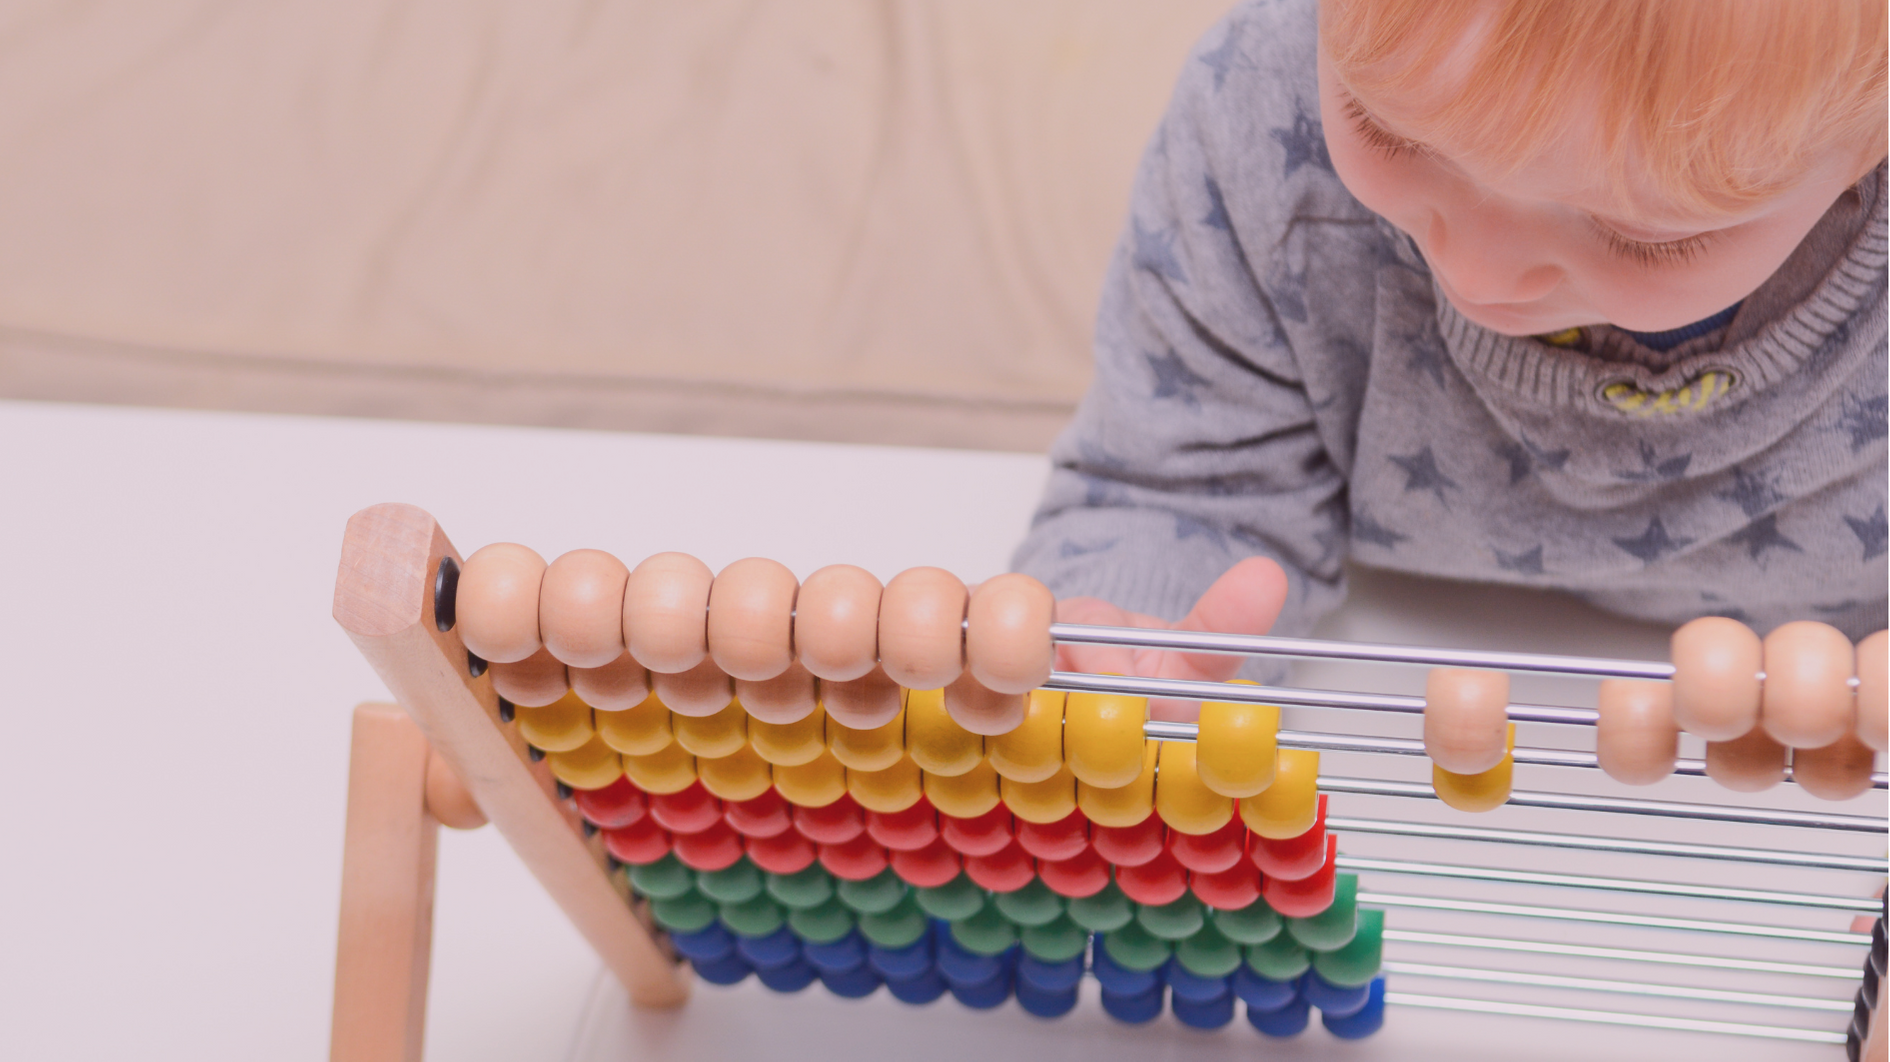 Pre-Maths is a building block for childhood development